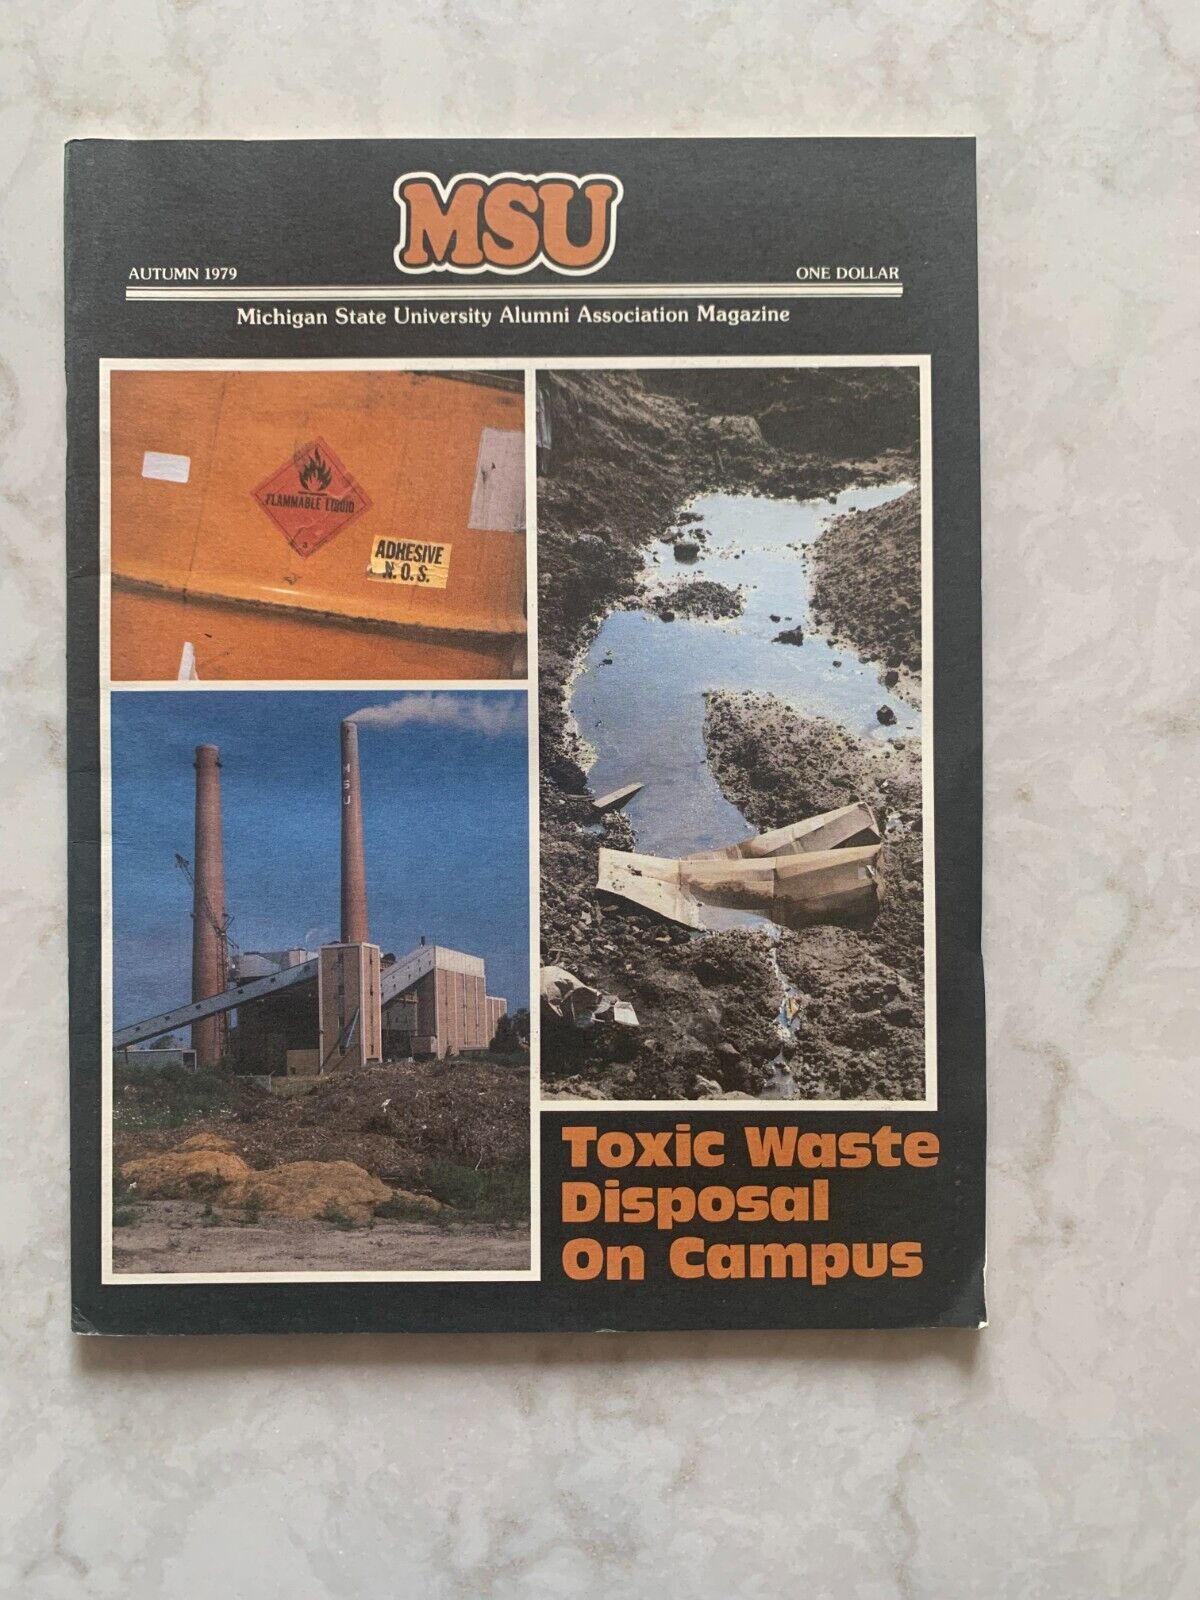 Michigan State University Alumni Association magazine, Autumn 1979